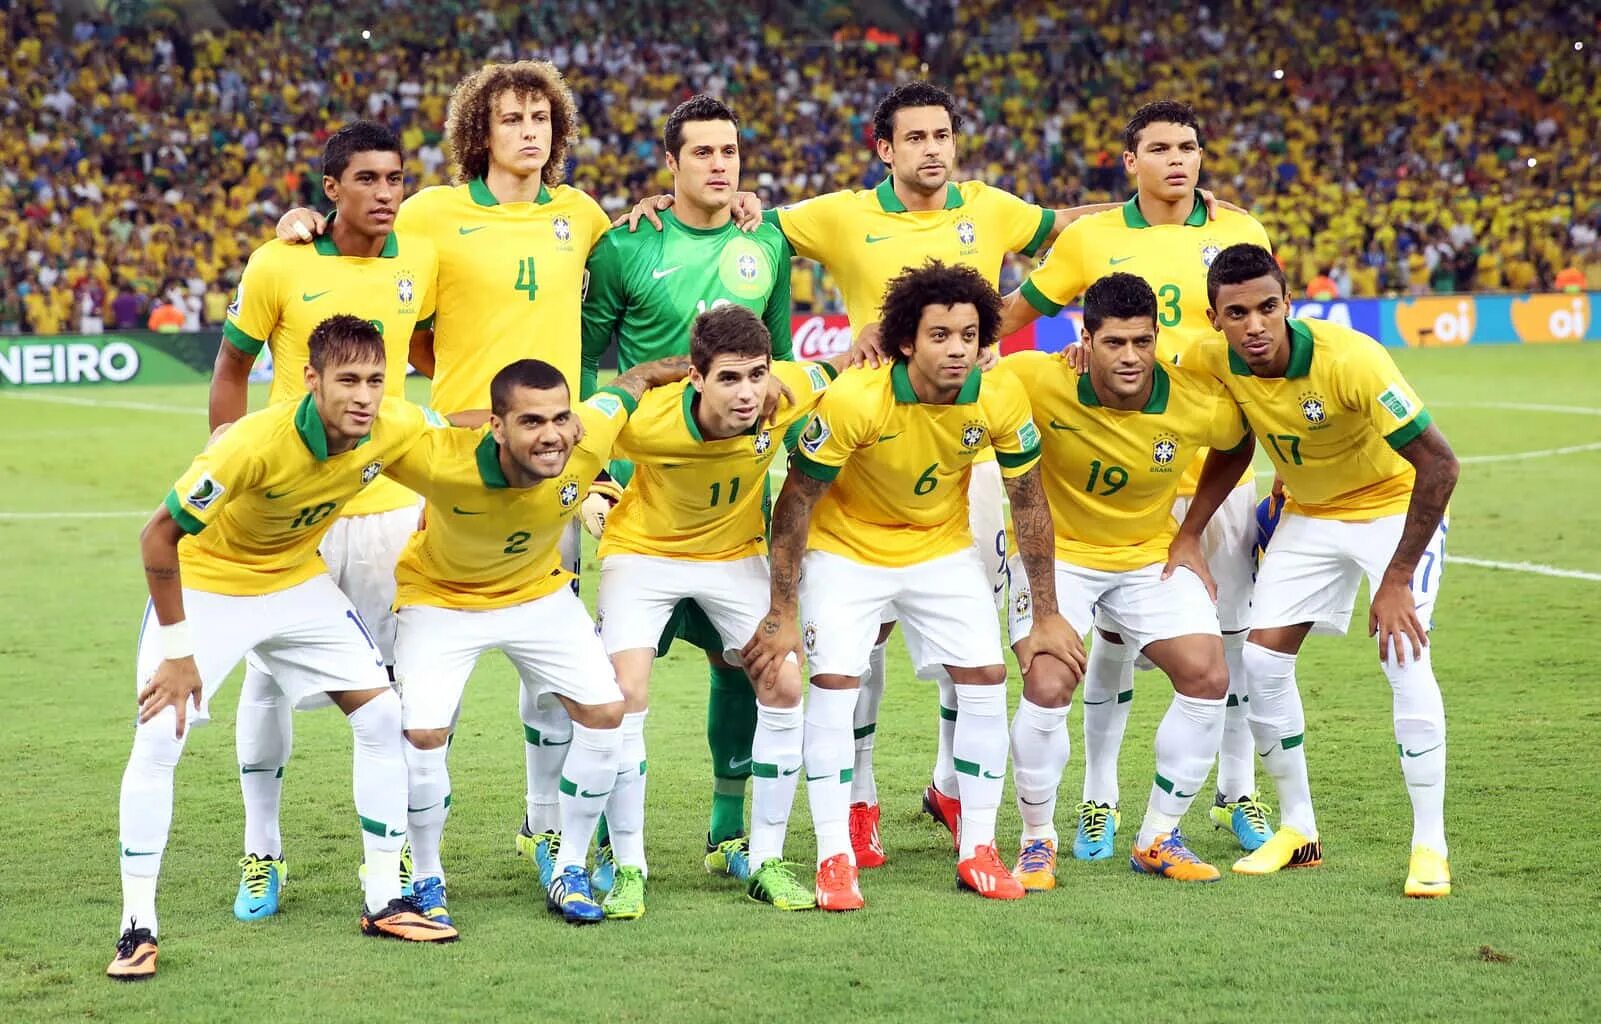 Команда Бразилии по футболу 2014. Сборная Бразилии по футболу 2014. Сборная Бразилии. Сборная Бразилии по футболу 2014 состав.